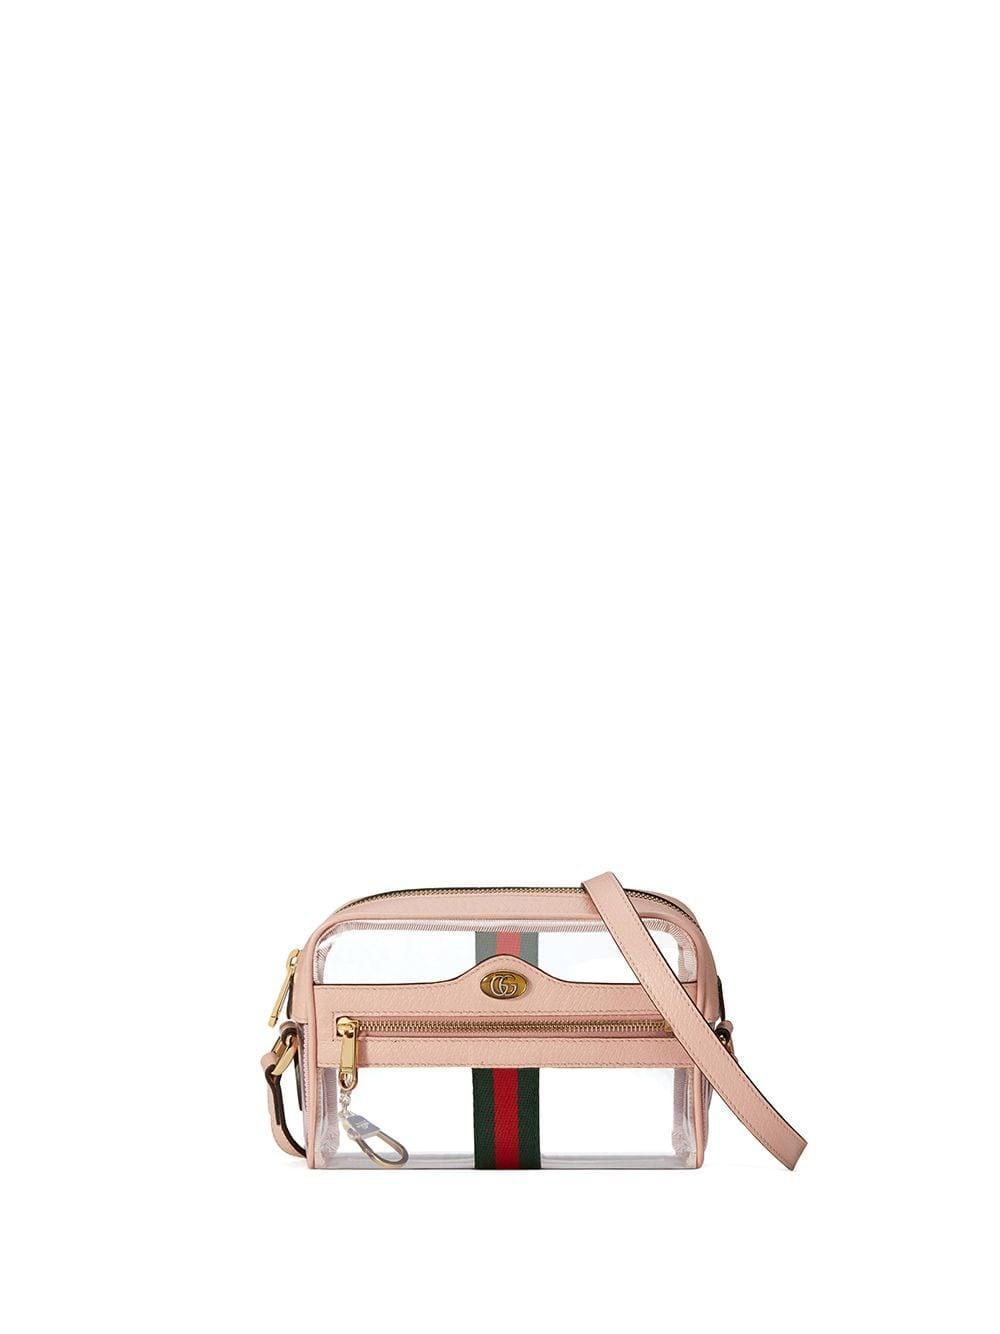 Gucci Pink Translucent Ophidia Camera Bag Crossbody Clear Beach